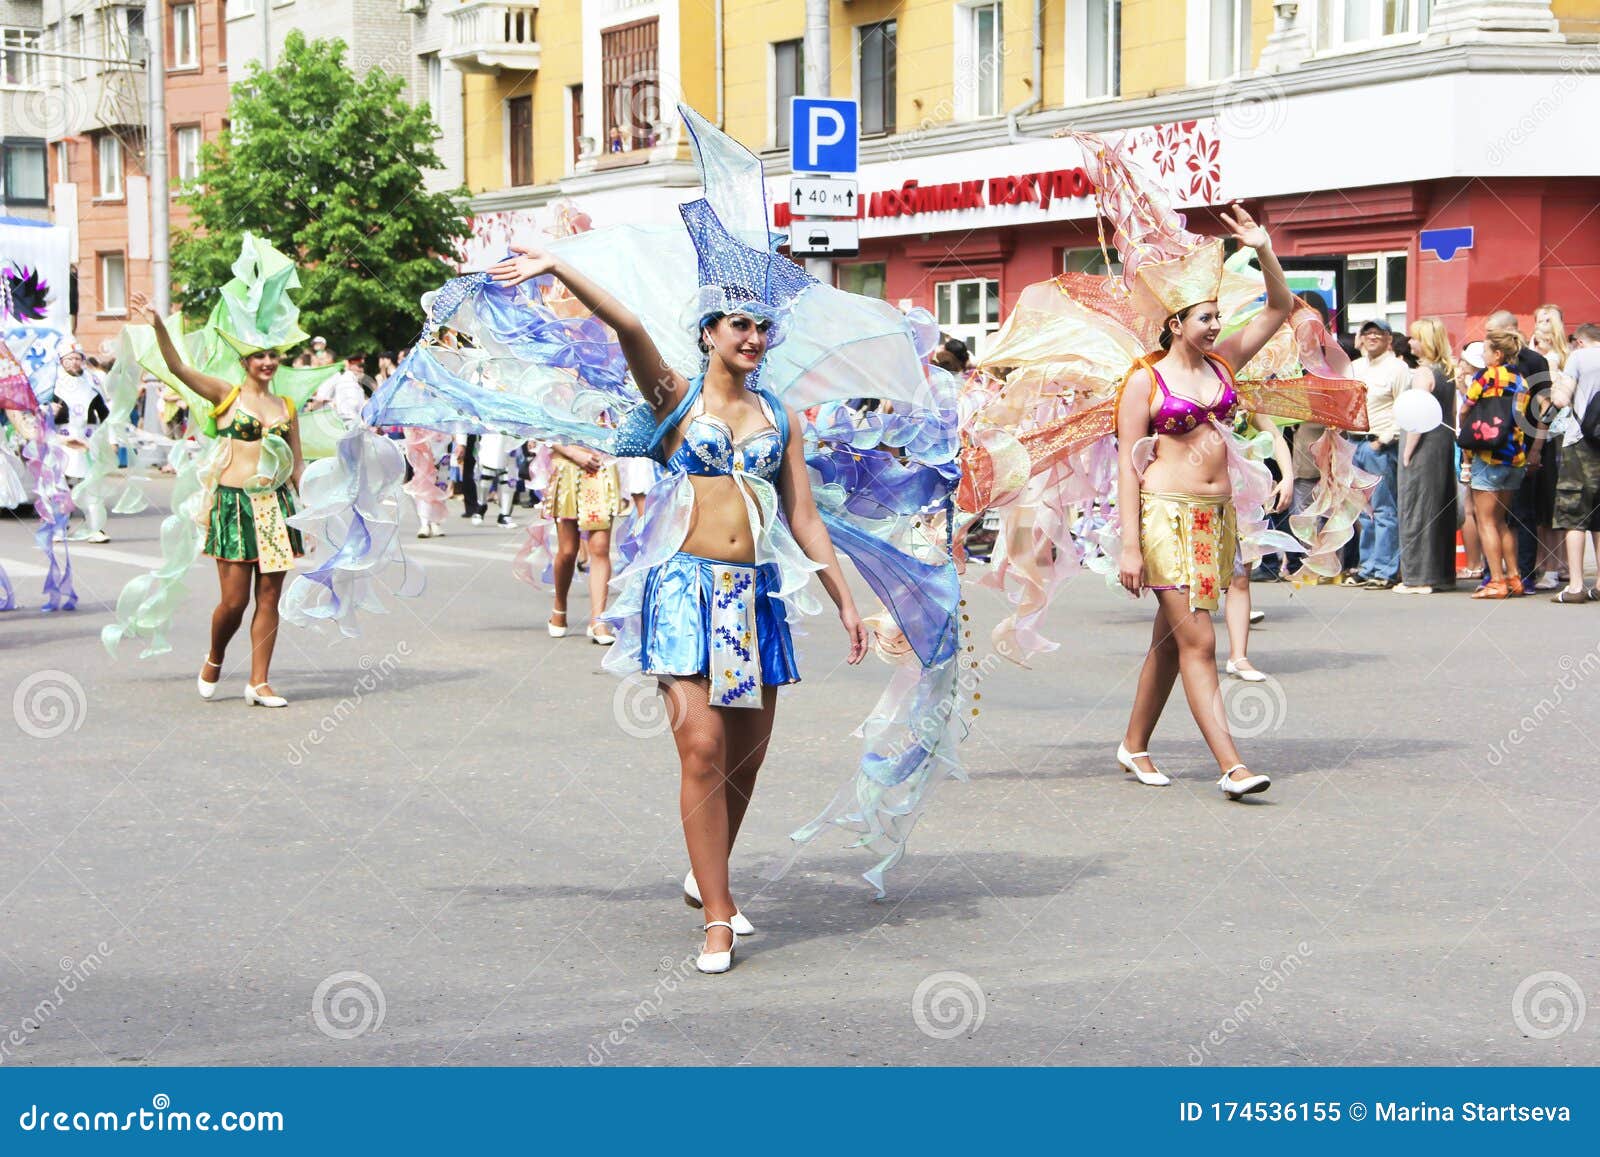 Krasnoyarsk, Russia, June 15, 2013. Women in Theatrical Costumes of a